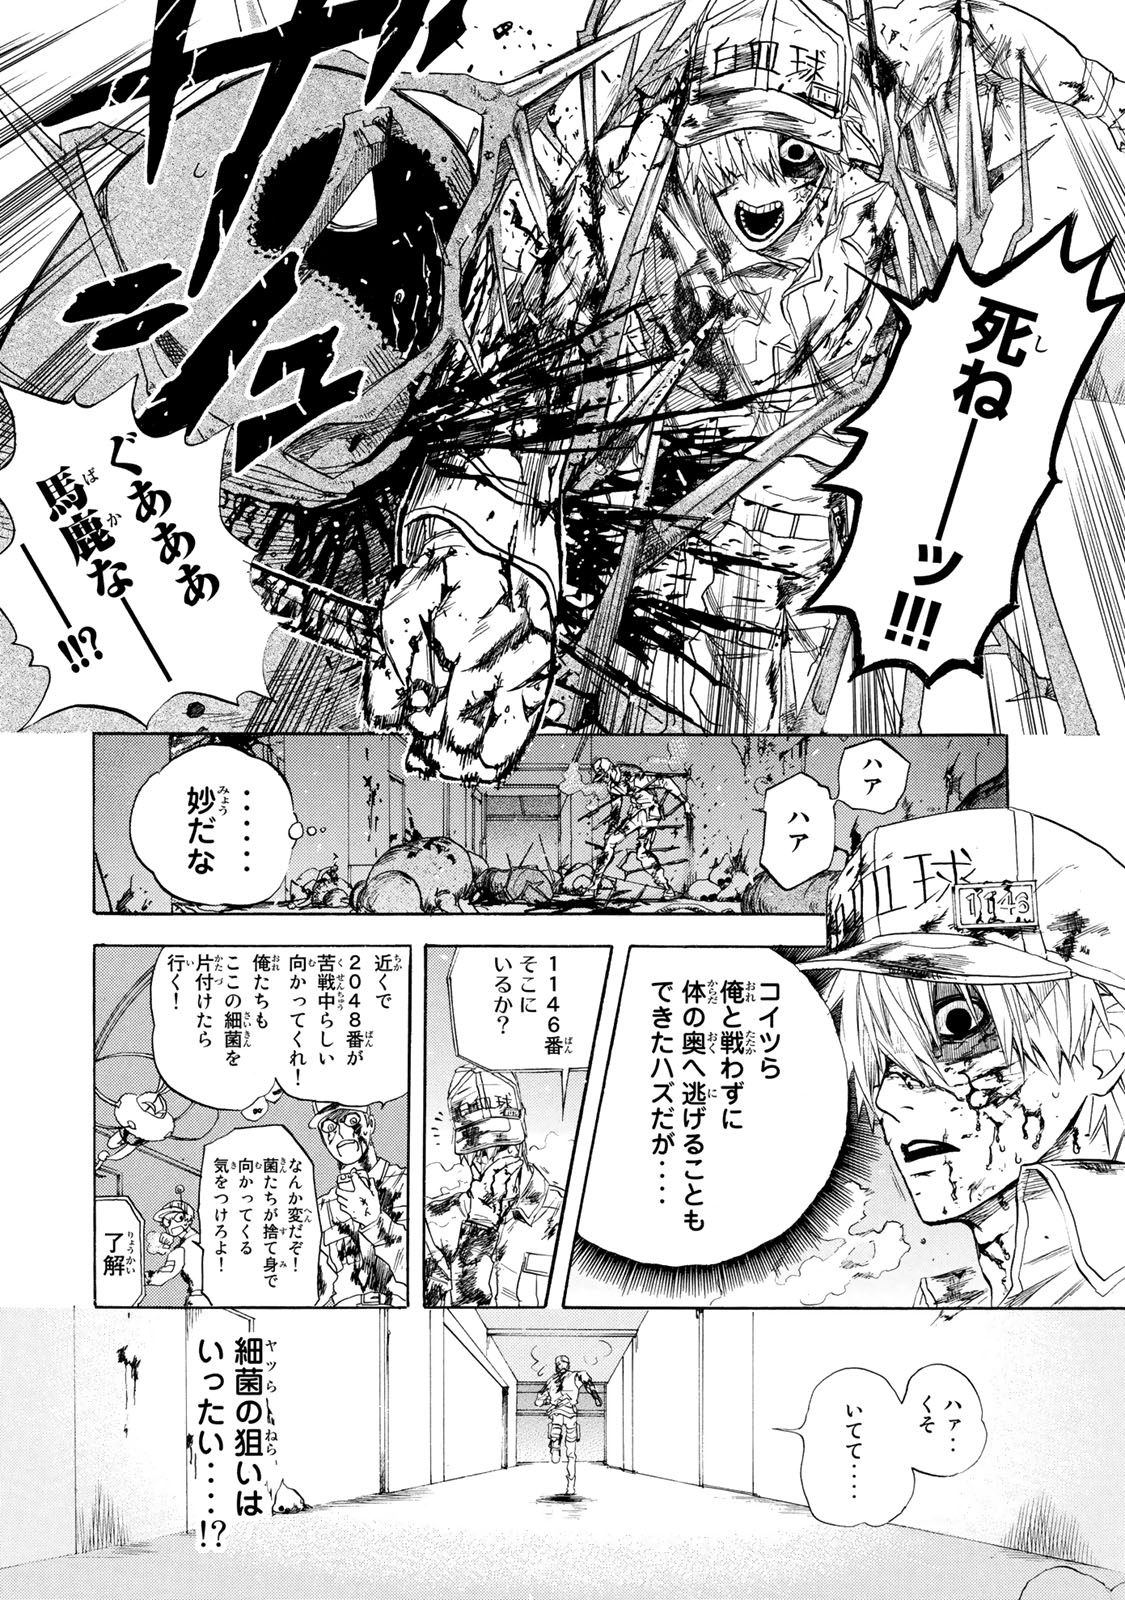 Hataraku Saibou - Chapter 4 - Page 18